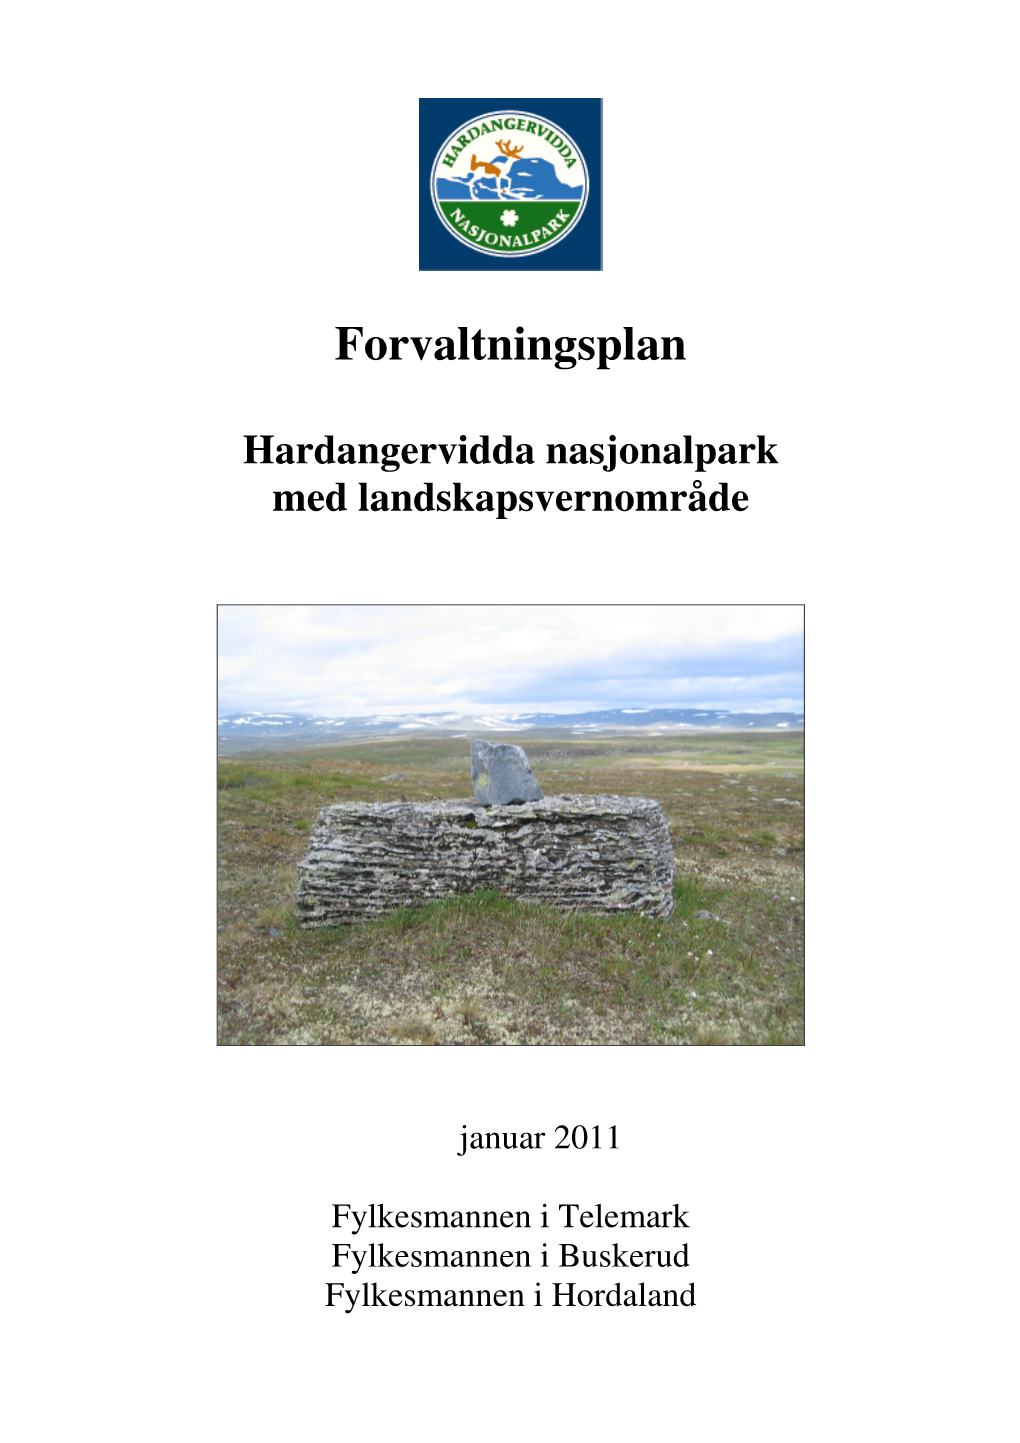 Forvaltningsplan Hardangervidda Nasjonalpark, Januar 2011 Side 1